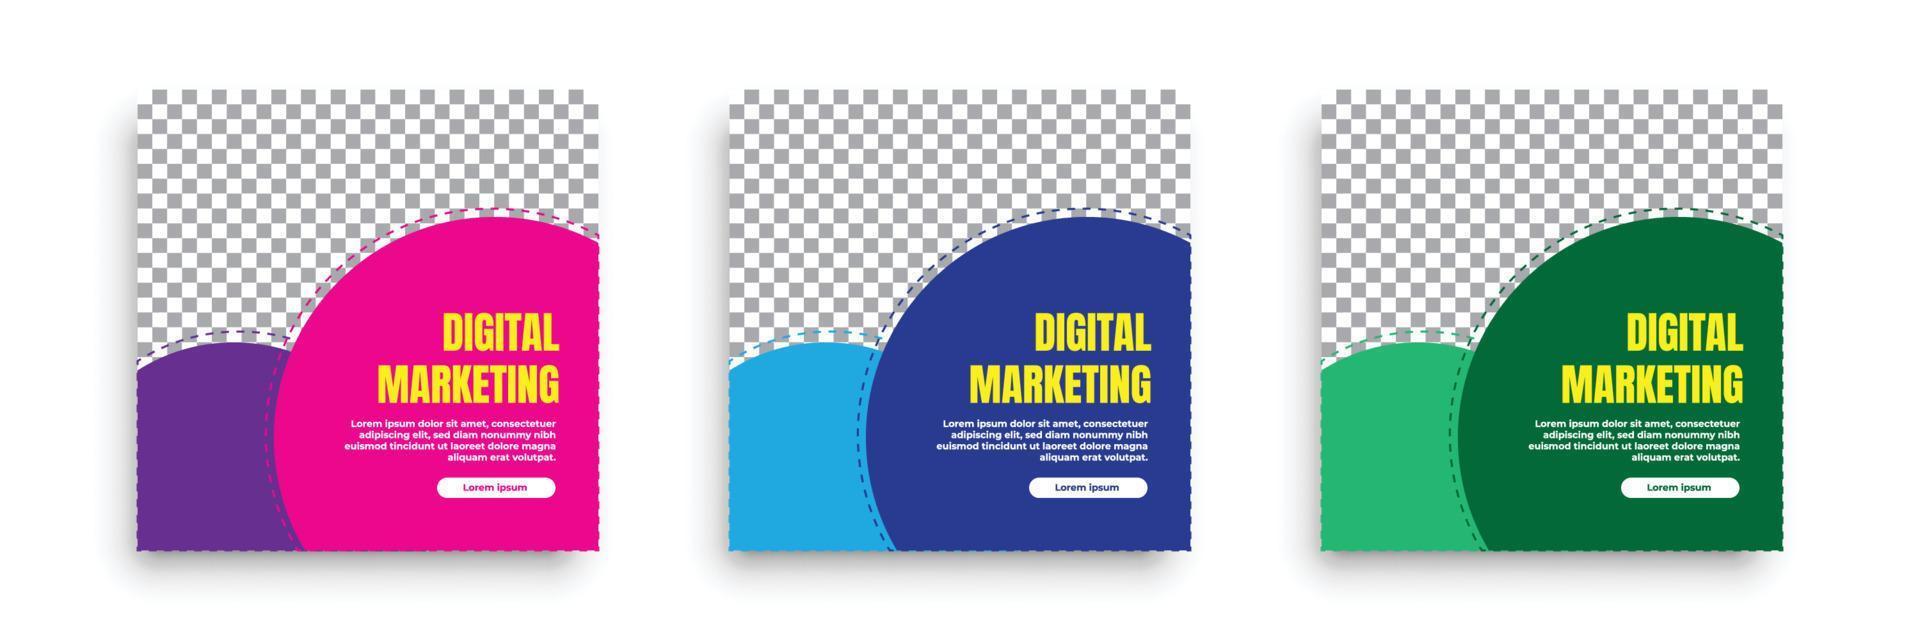 Social Marketing Postvorlage für digitales Marketing. vektor